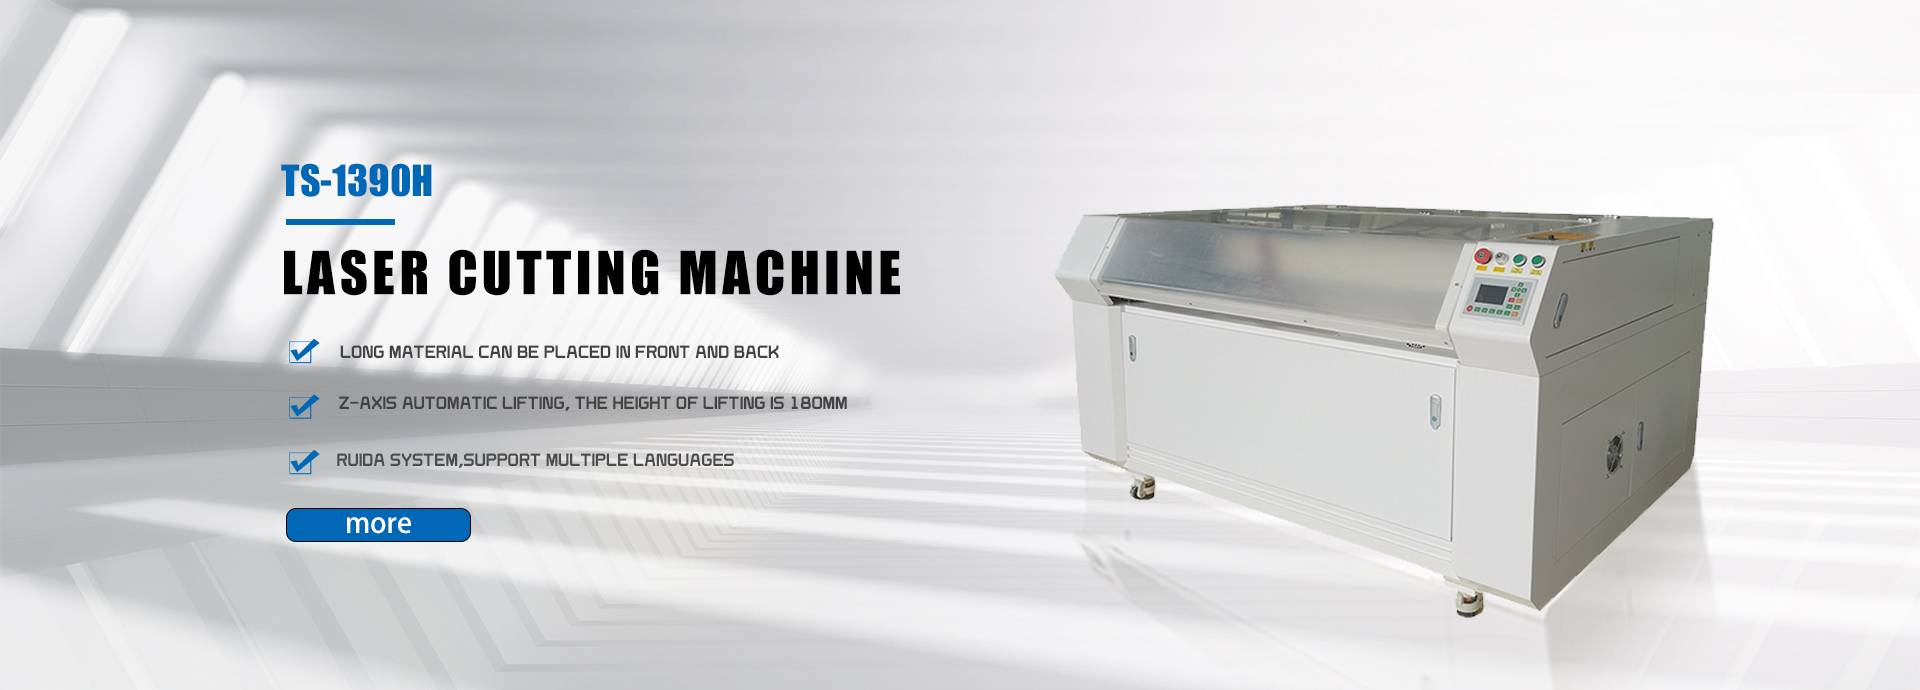 1390h laser cutting machine